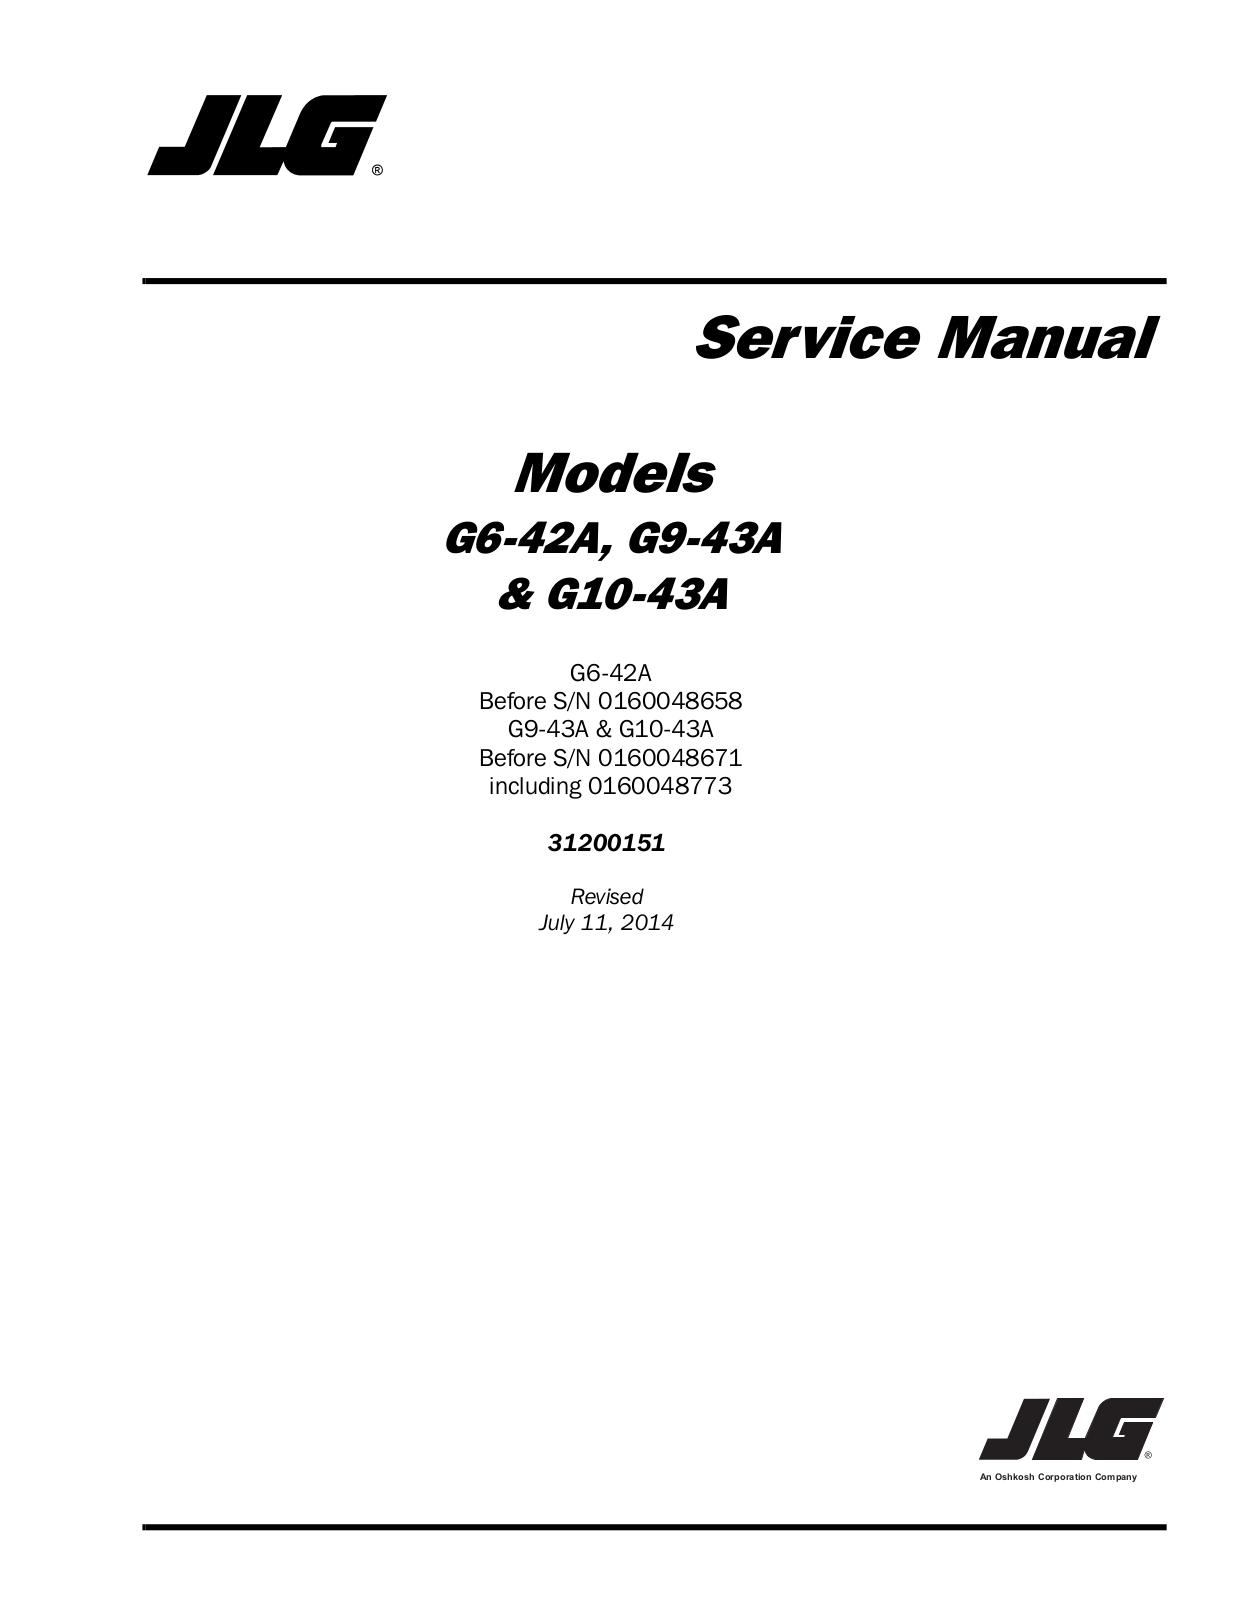 JLG G6-42A Service Manual